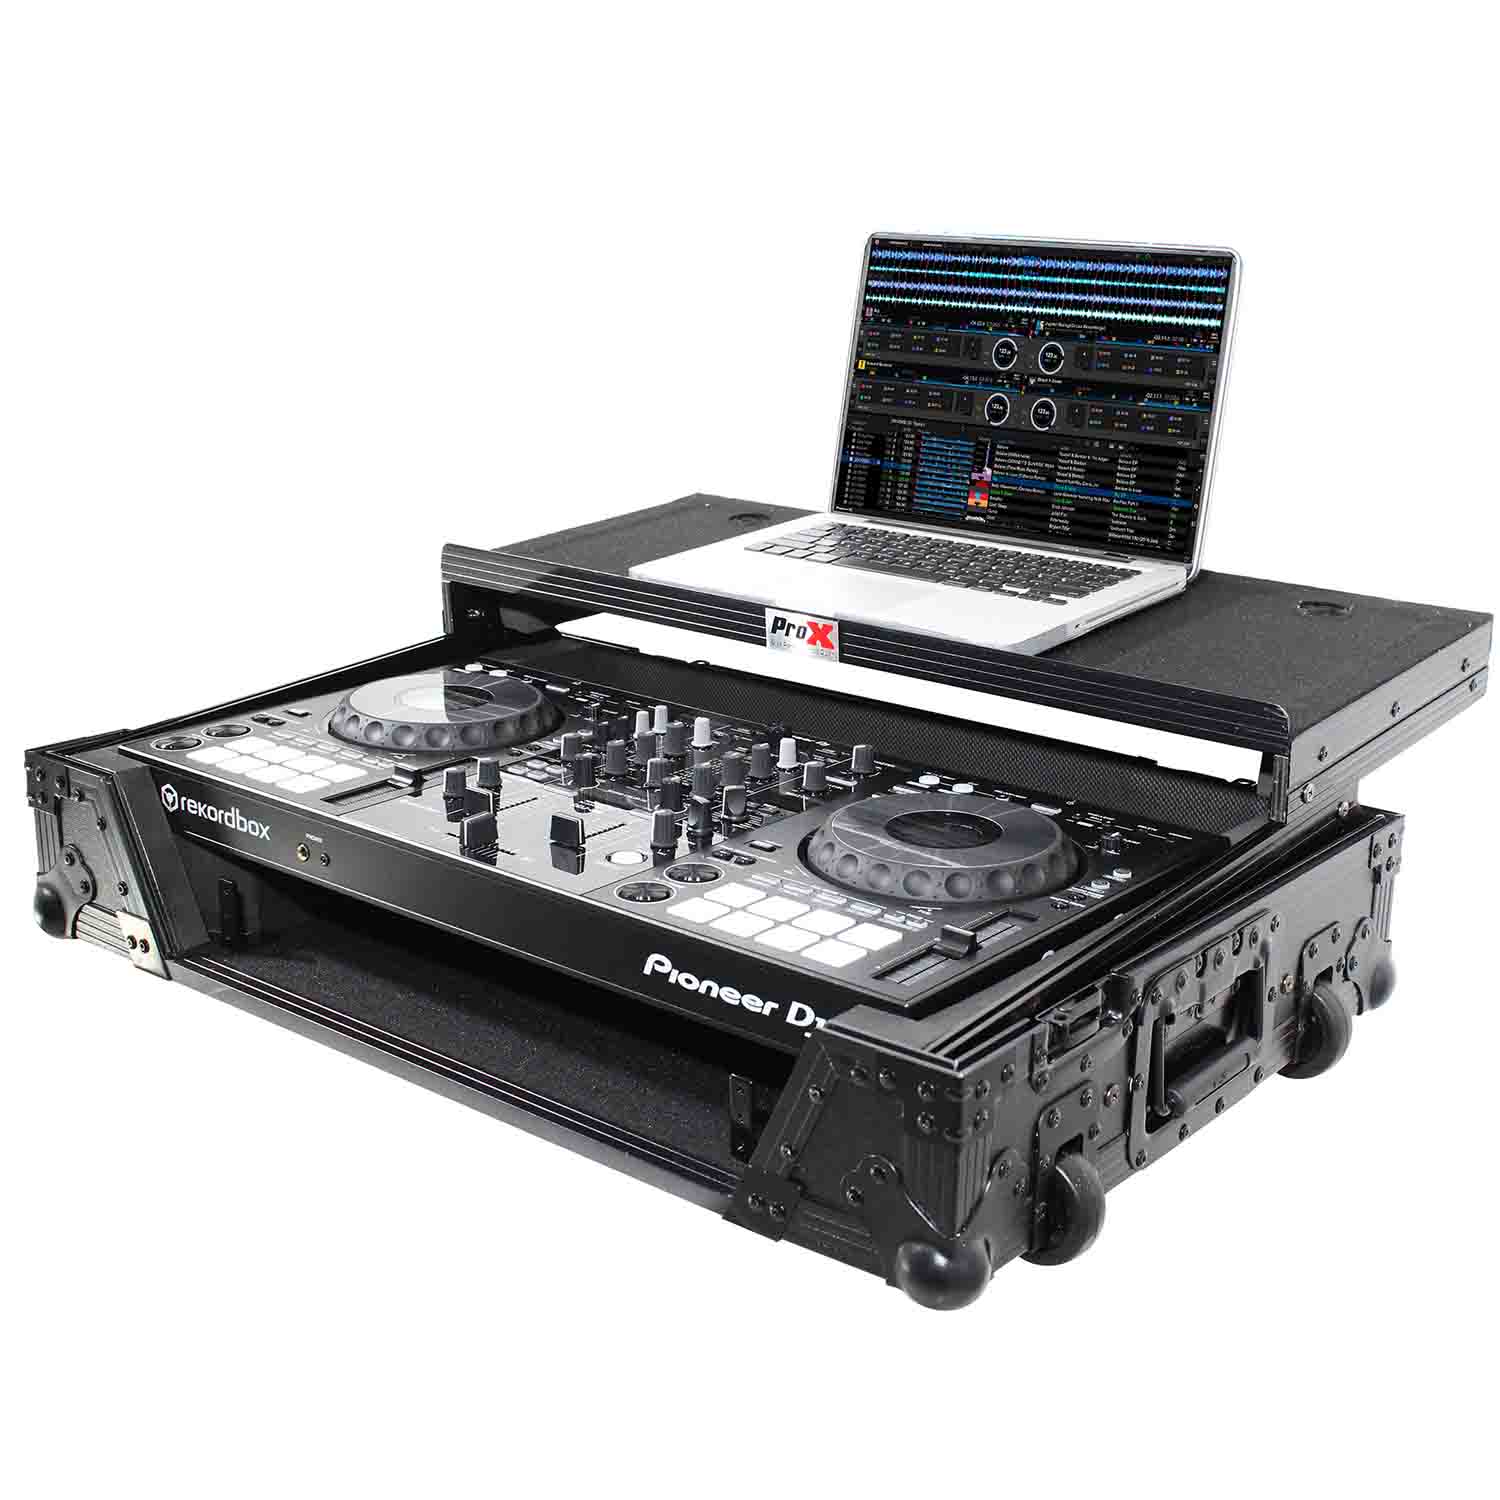 ProX XS-DDJ800 WLTBL DJ Flight Case For Pioneer DDJ-800 DJ Controller - Black on Black - Hollywood DJ